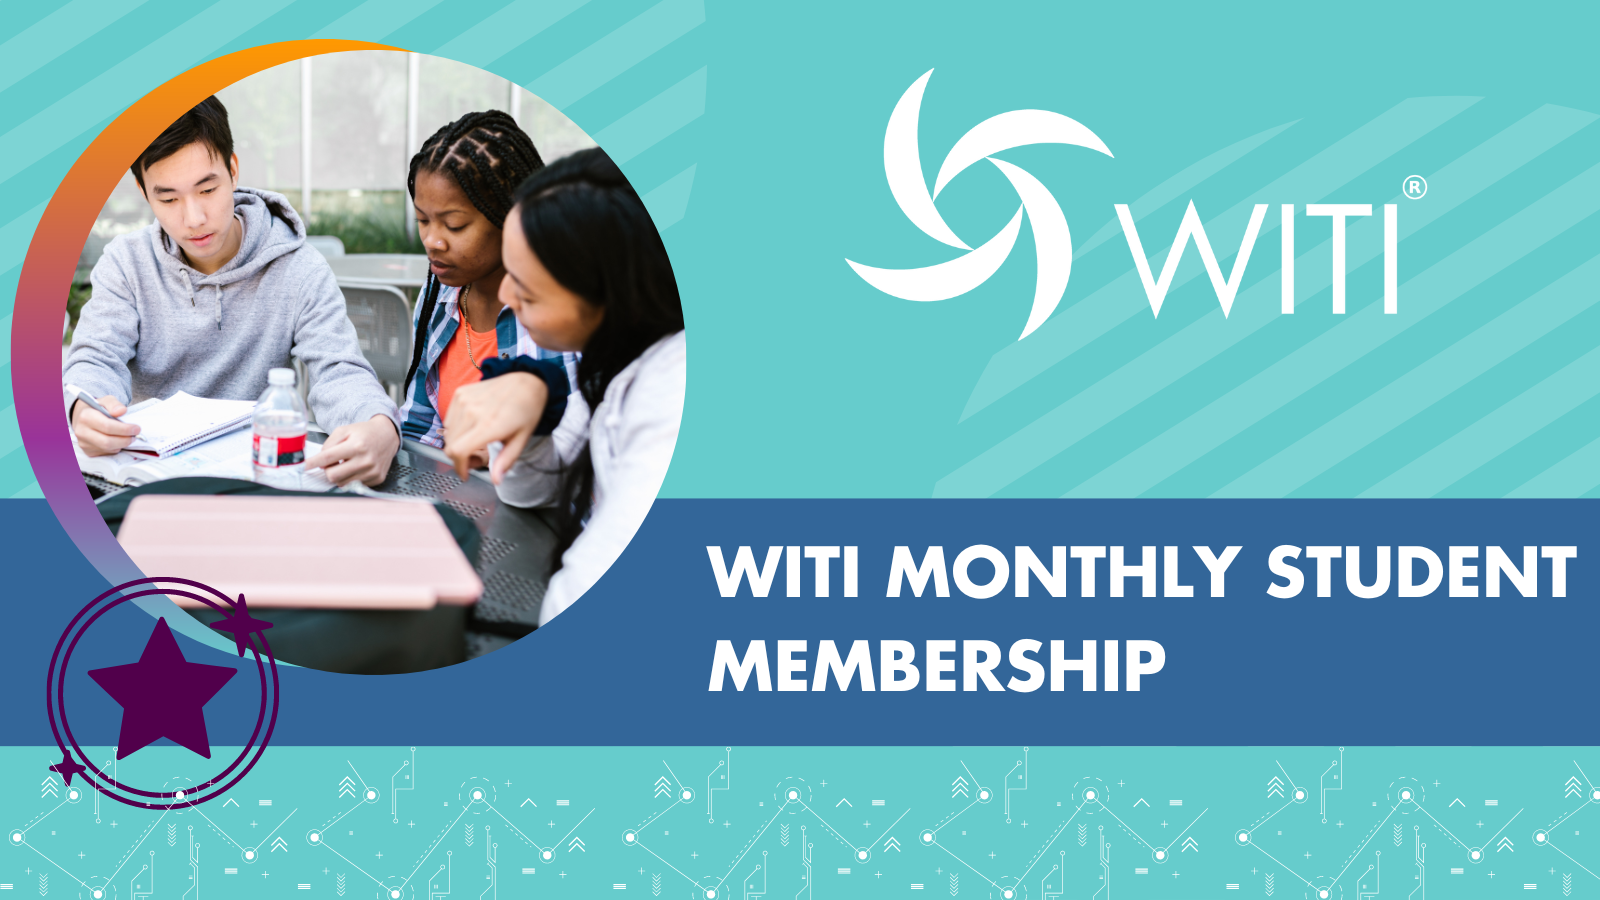 WITI Monthly Student Membership